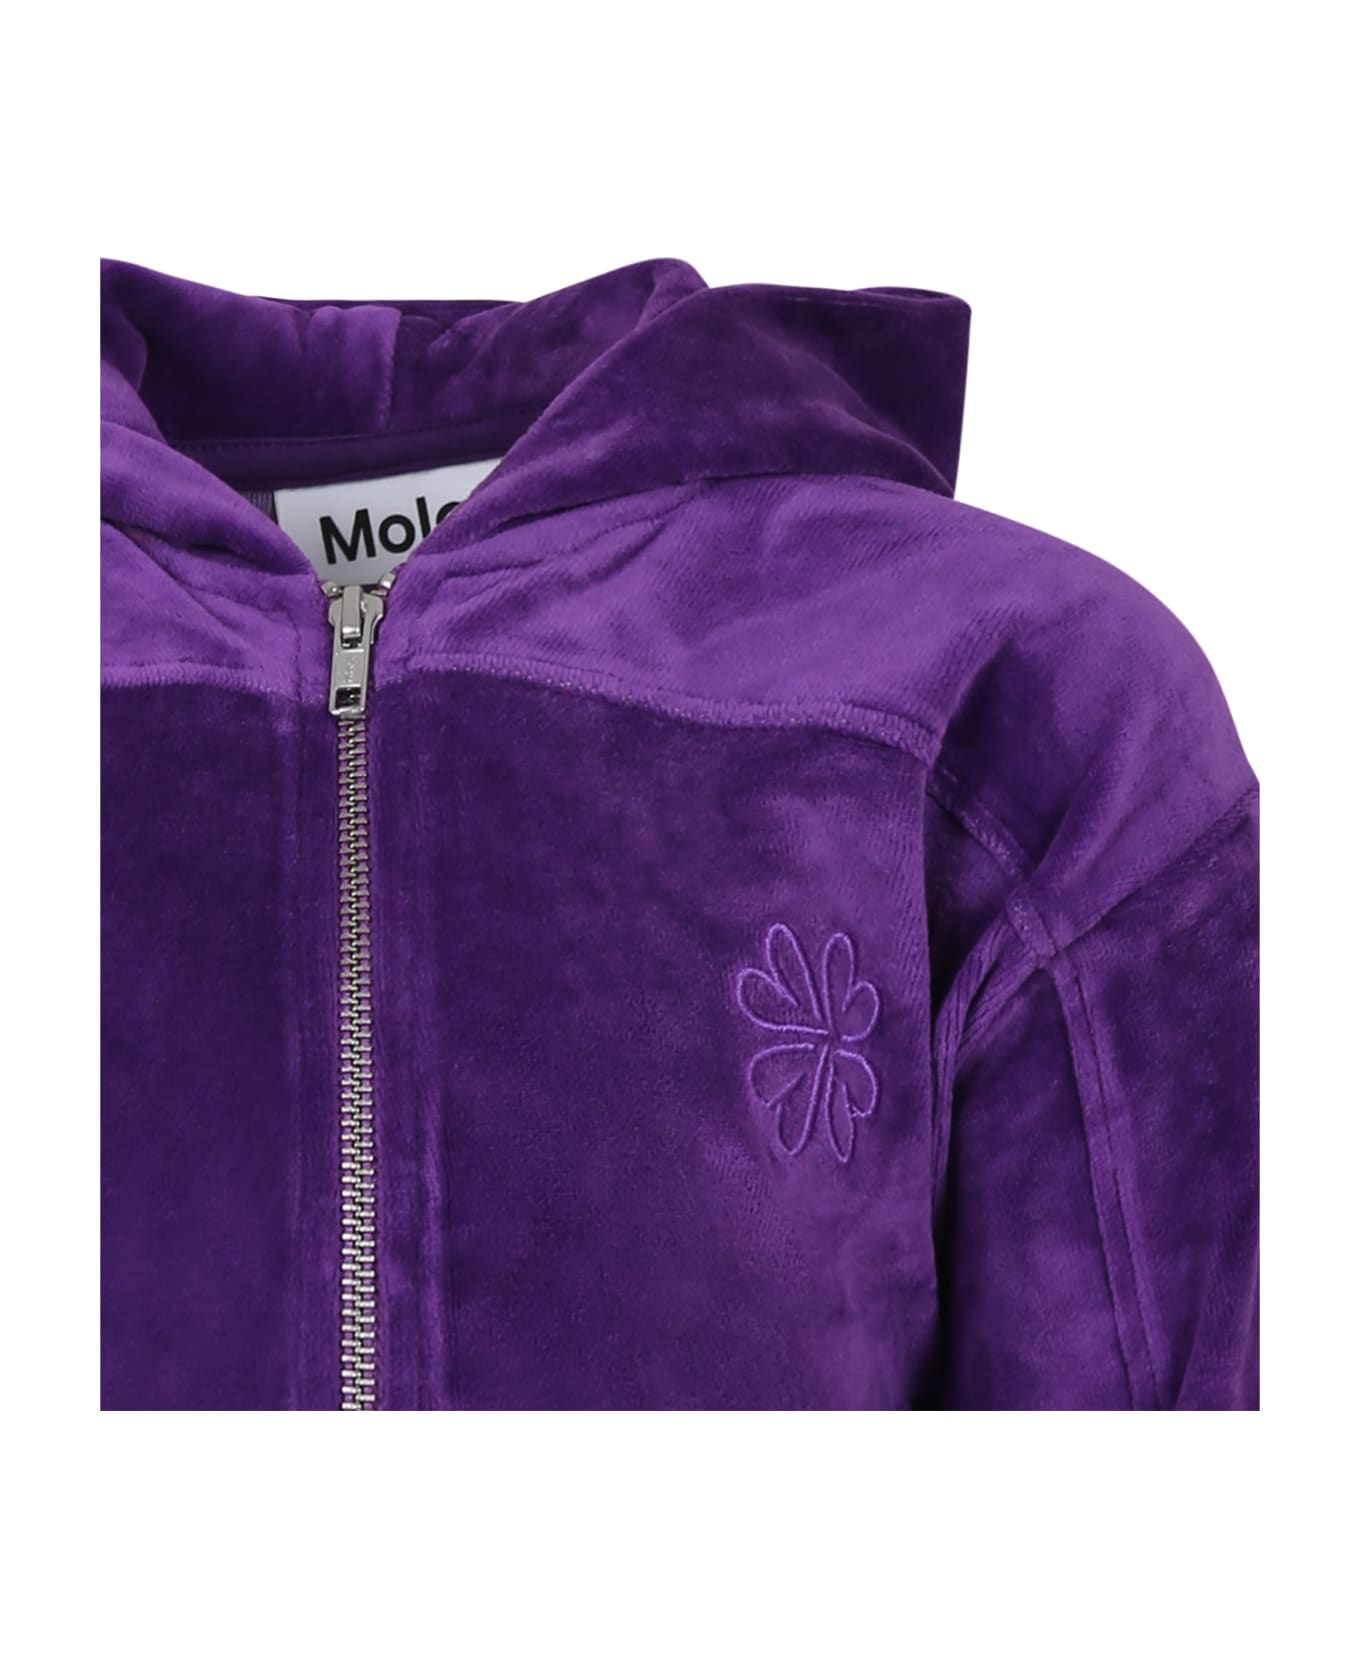 Molo Purple Sweatshirt For Girls With Embroidery - Violet ニットウェア＆スウェットシャツ